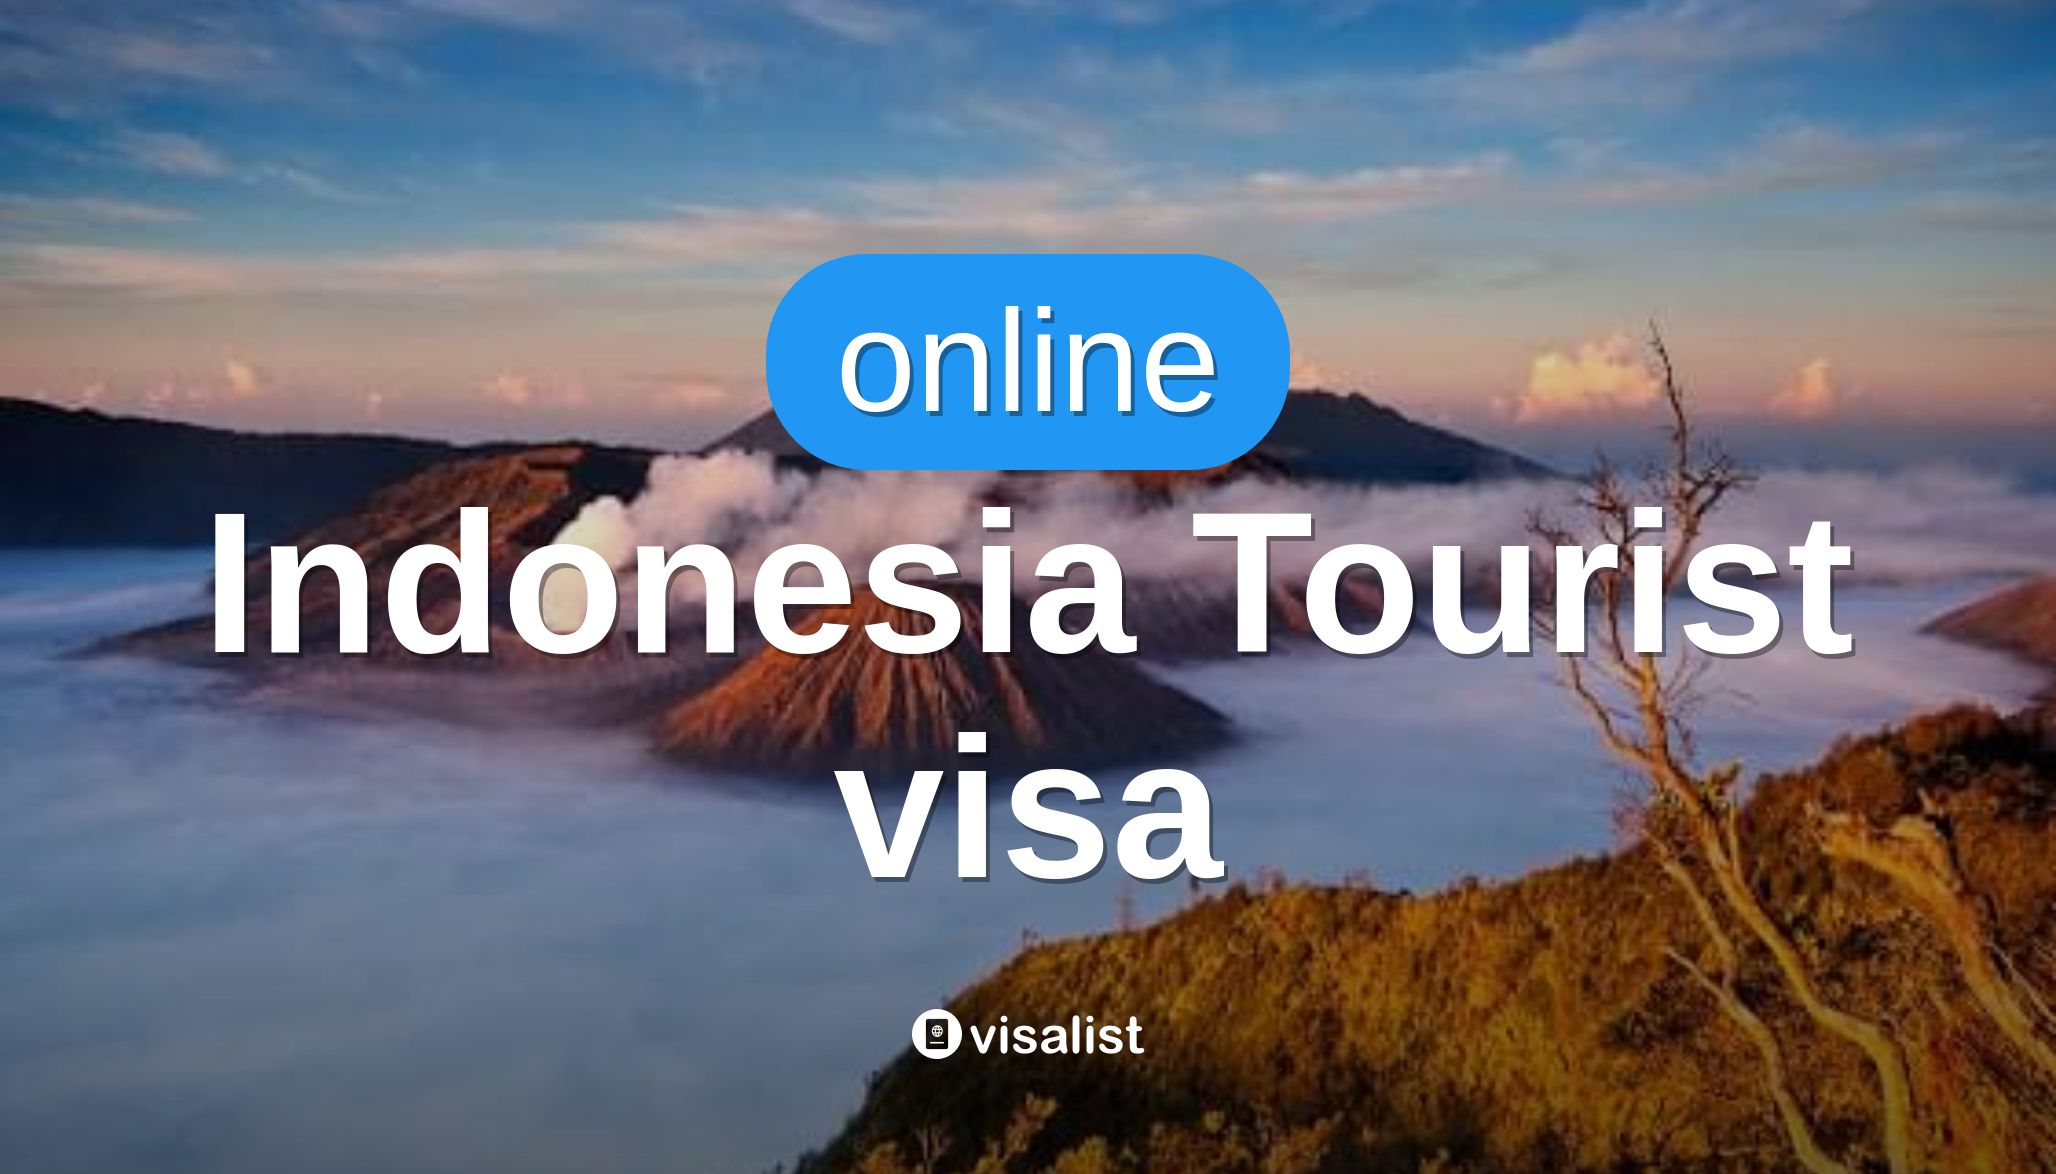 indonesia tourist visa for australian citizens